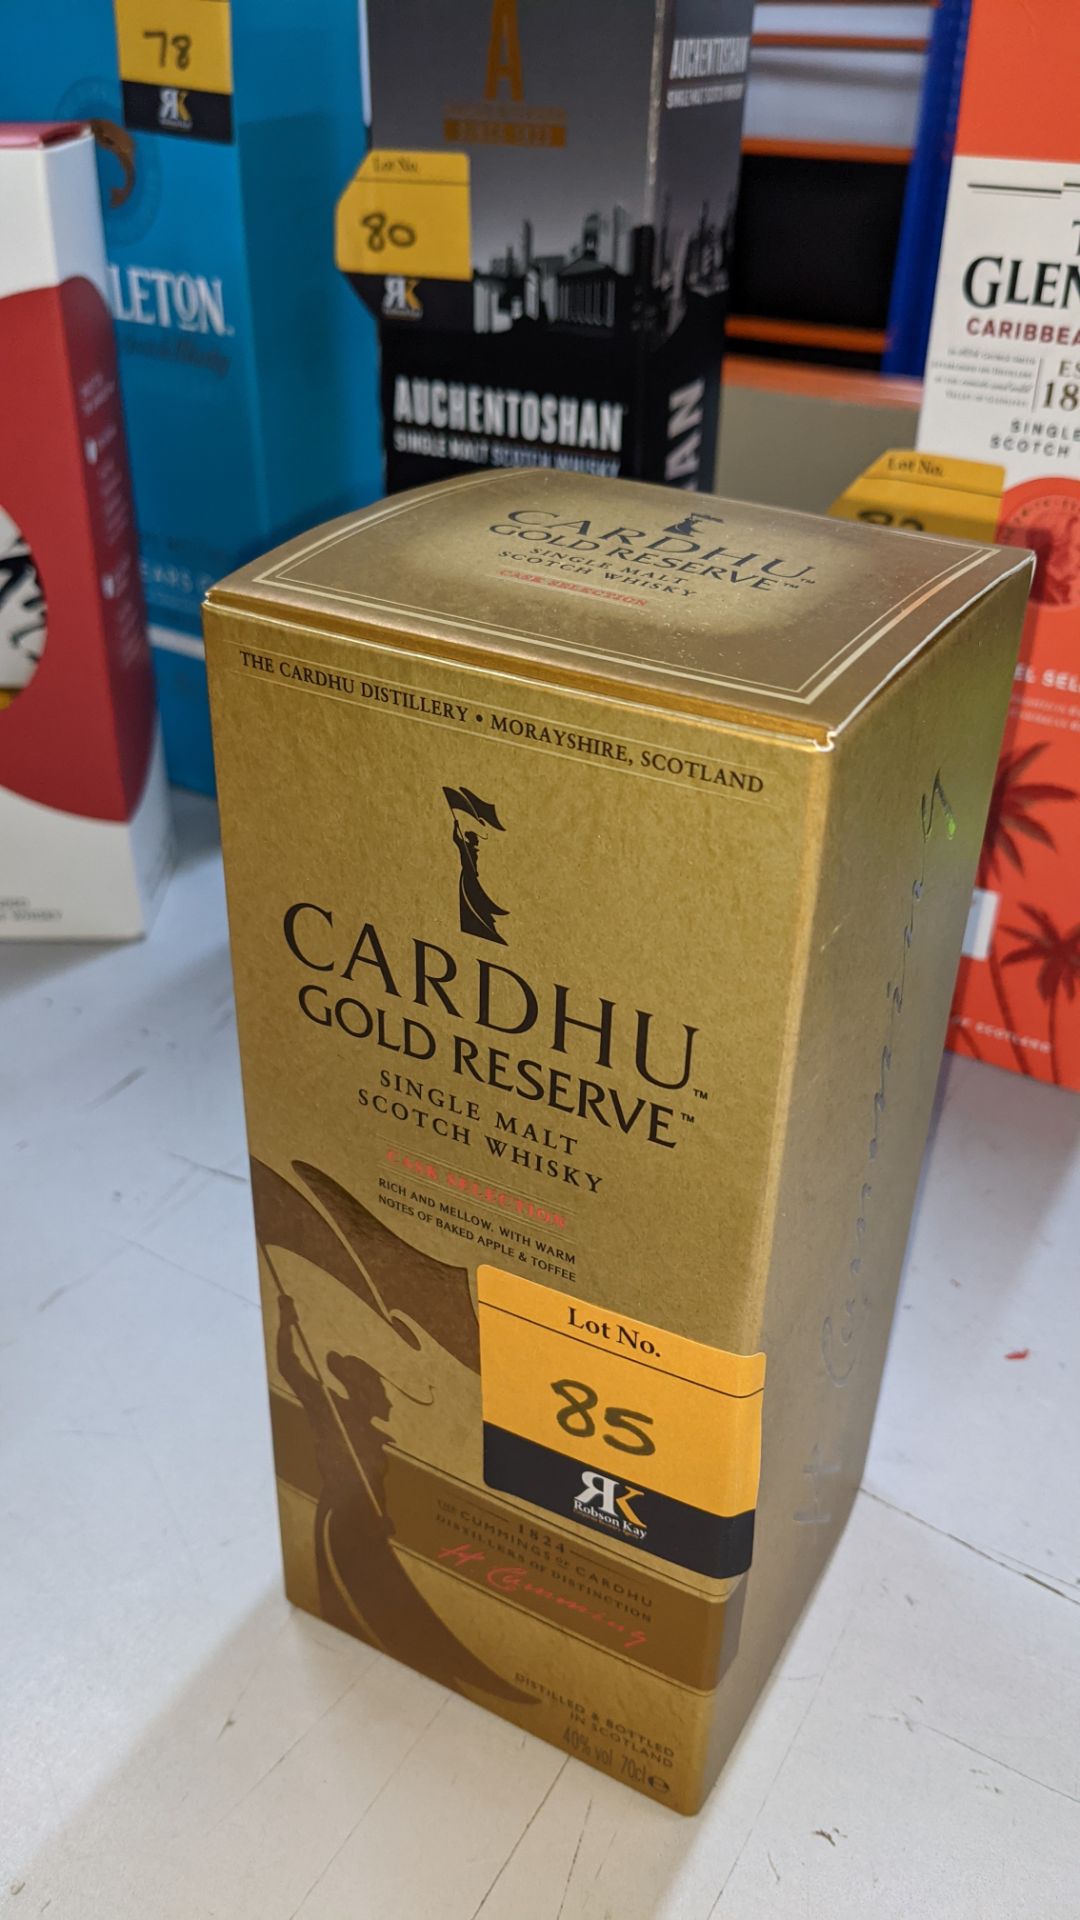 Cardhu Gold Reserve Single Malt Cask Selection Scotch Whisky - 1 off 70cl bottle in gift box. Sold u - Image 3 of 6